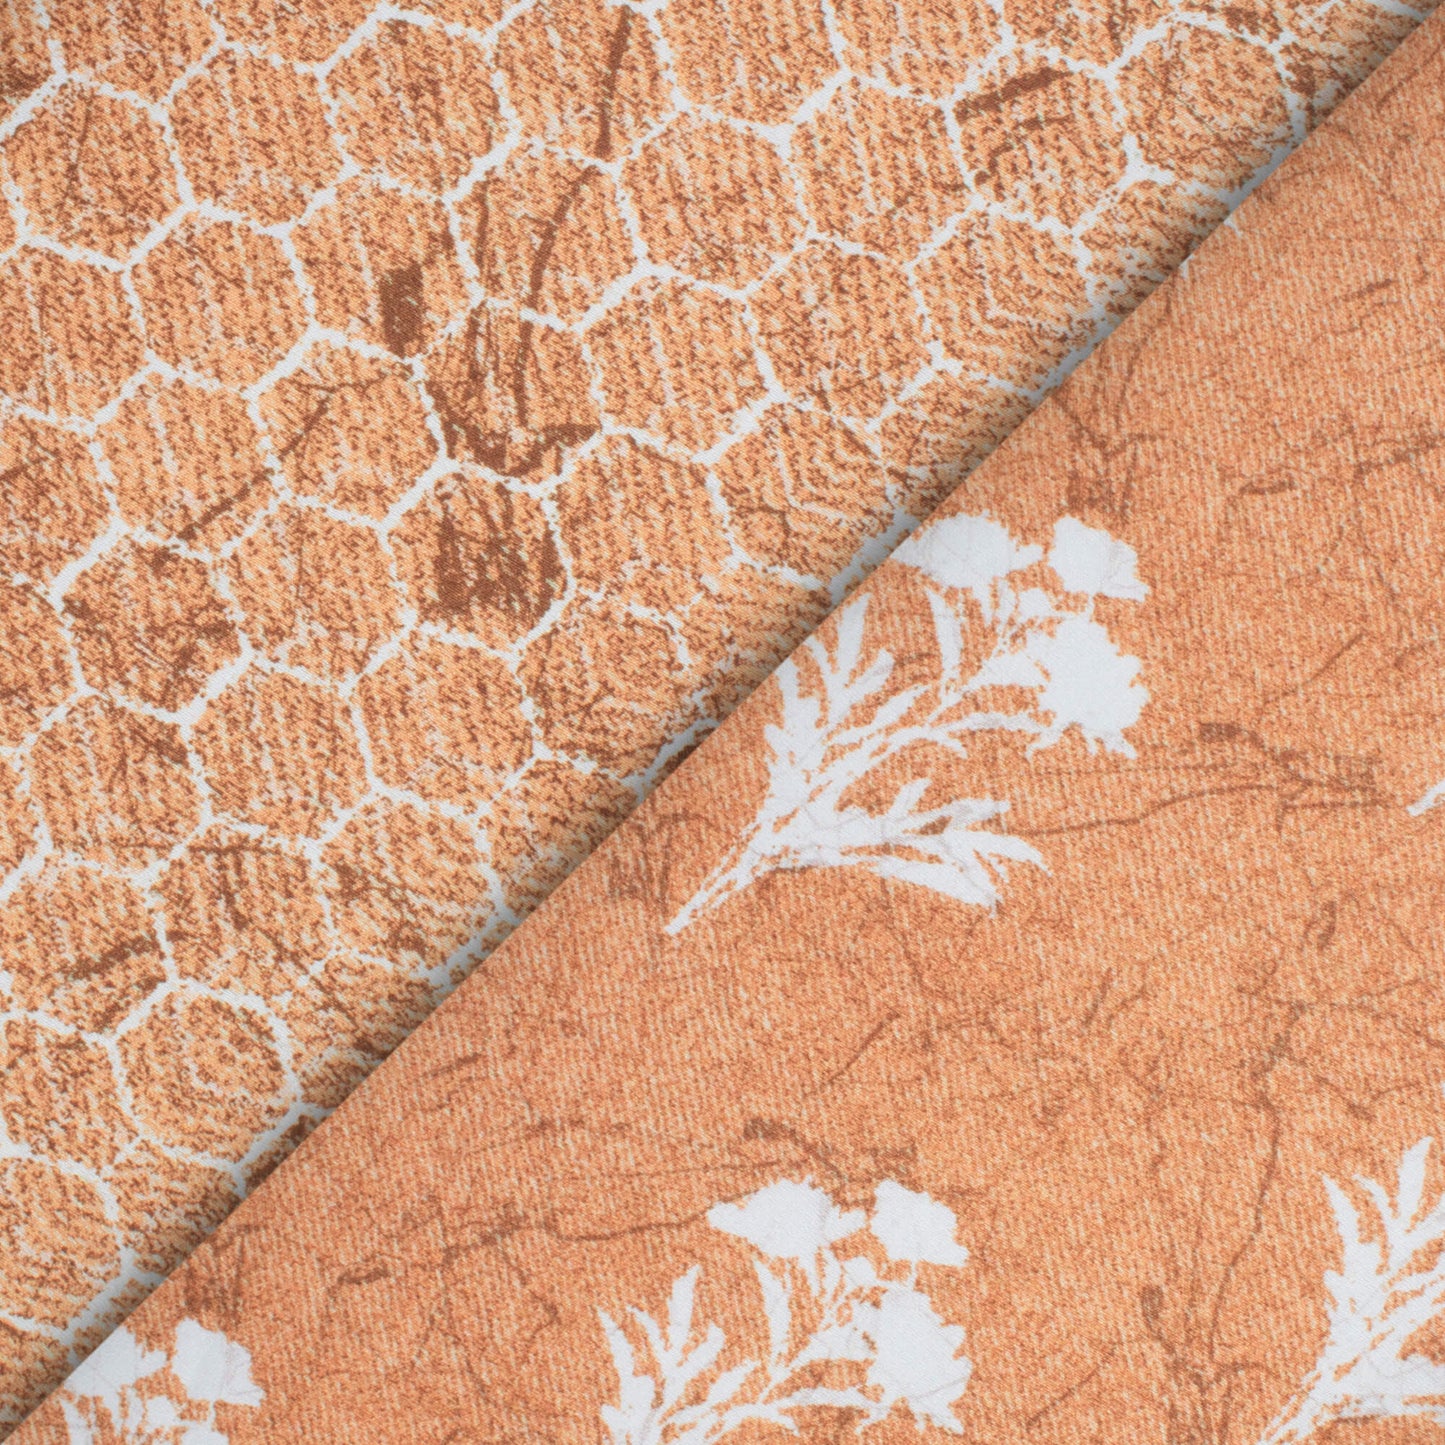 Sable Brown And White Geometric Pattern Digital Print Premium Lush Satin Fabric